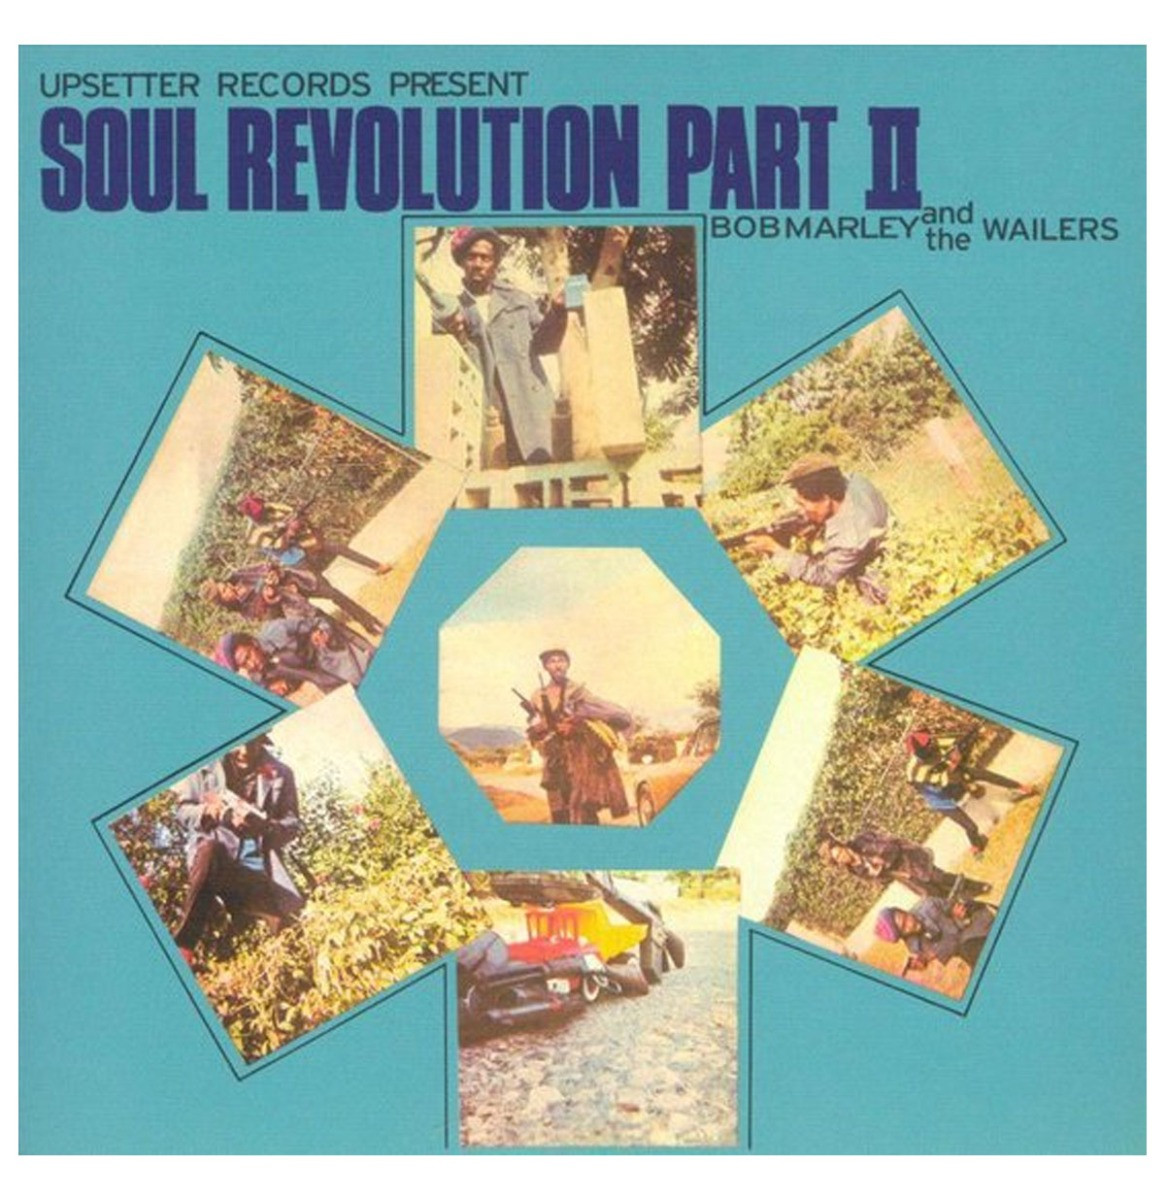 Bob Marley & The Wailers - Soul Revolution Part II LP